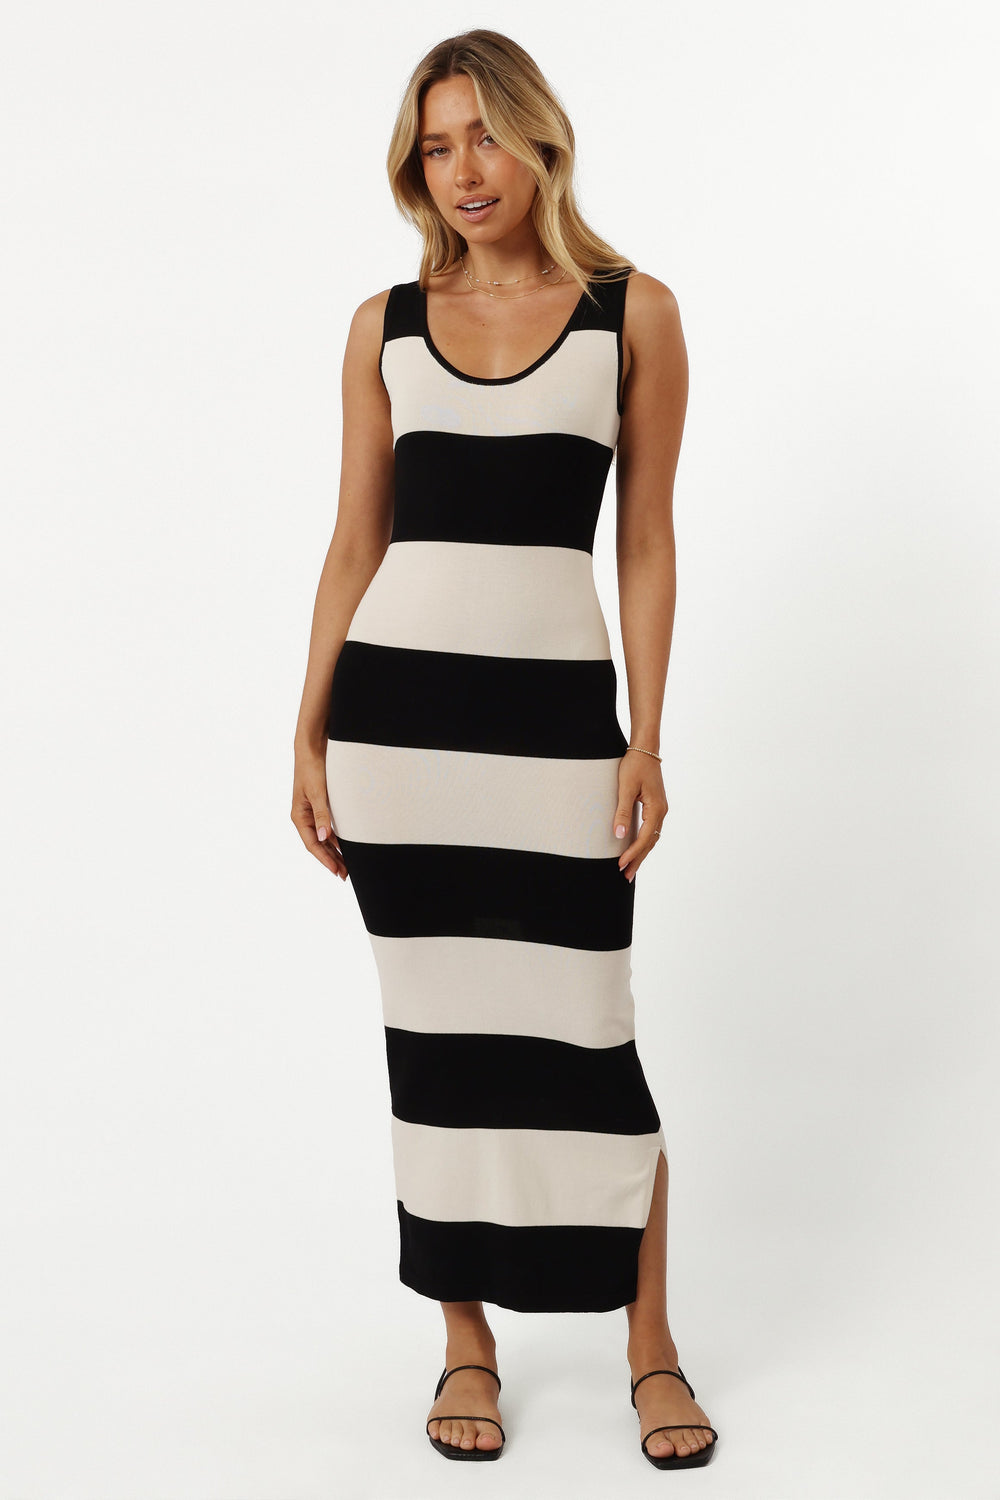 DRESSES @Bridget Midi Dress - Cream/Black Stripe (Hold for Winter Essentials)